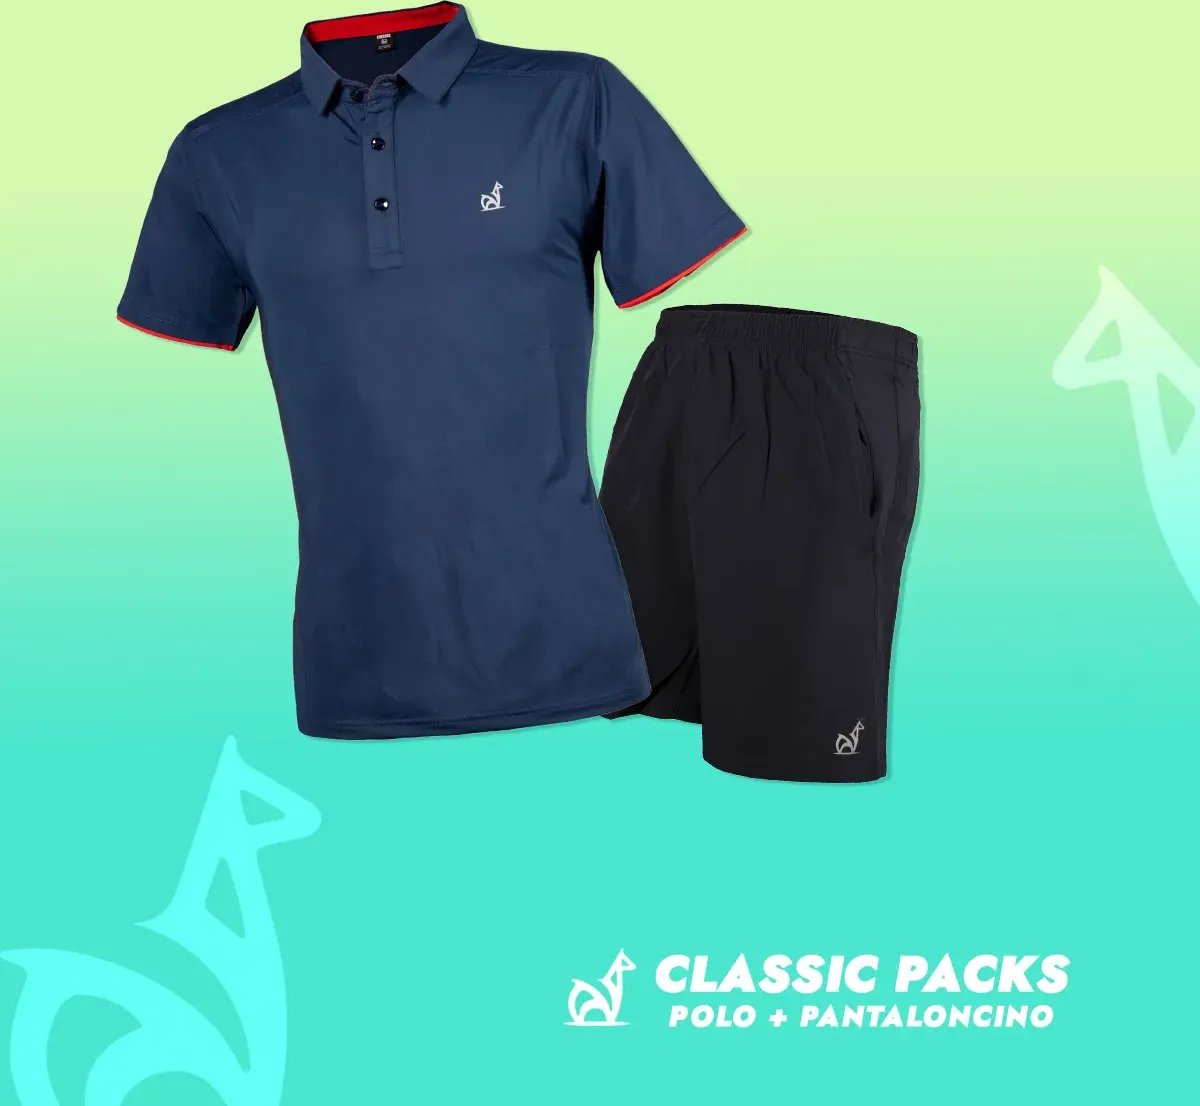 CLASSIC PACKS polo + pantaloncino navy